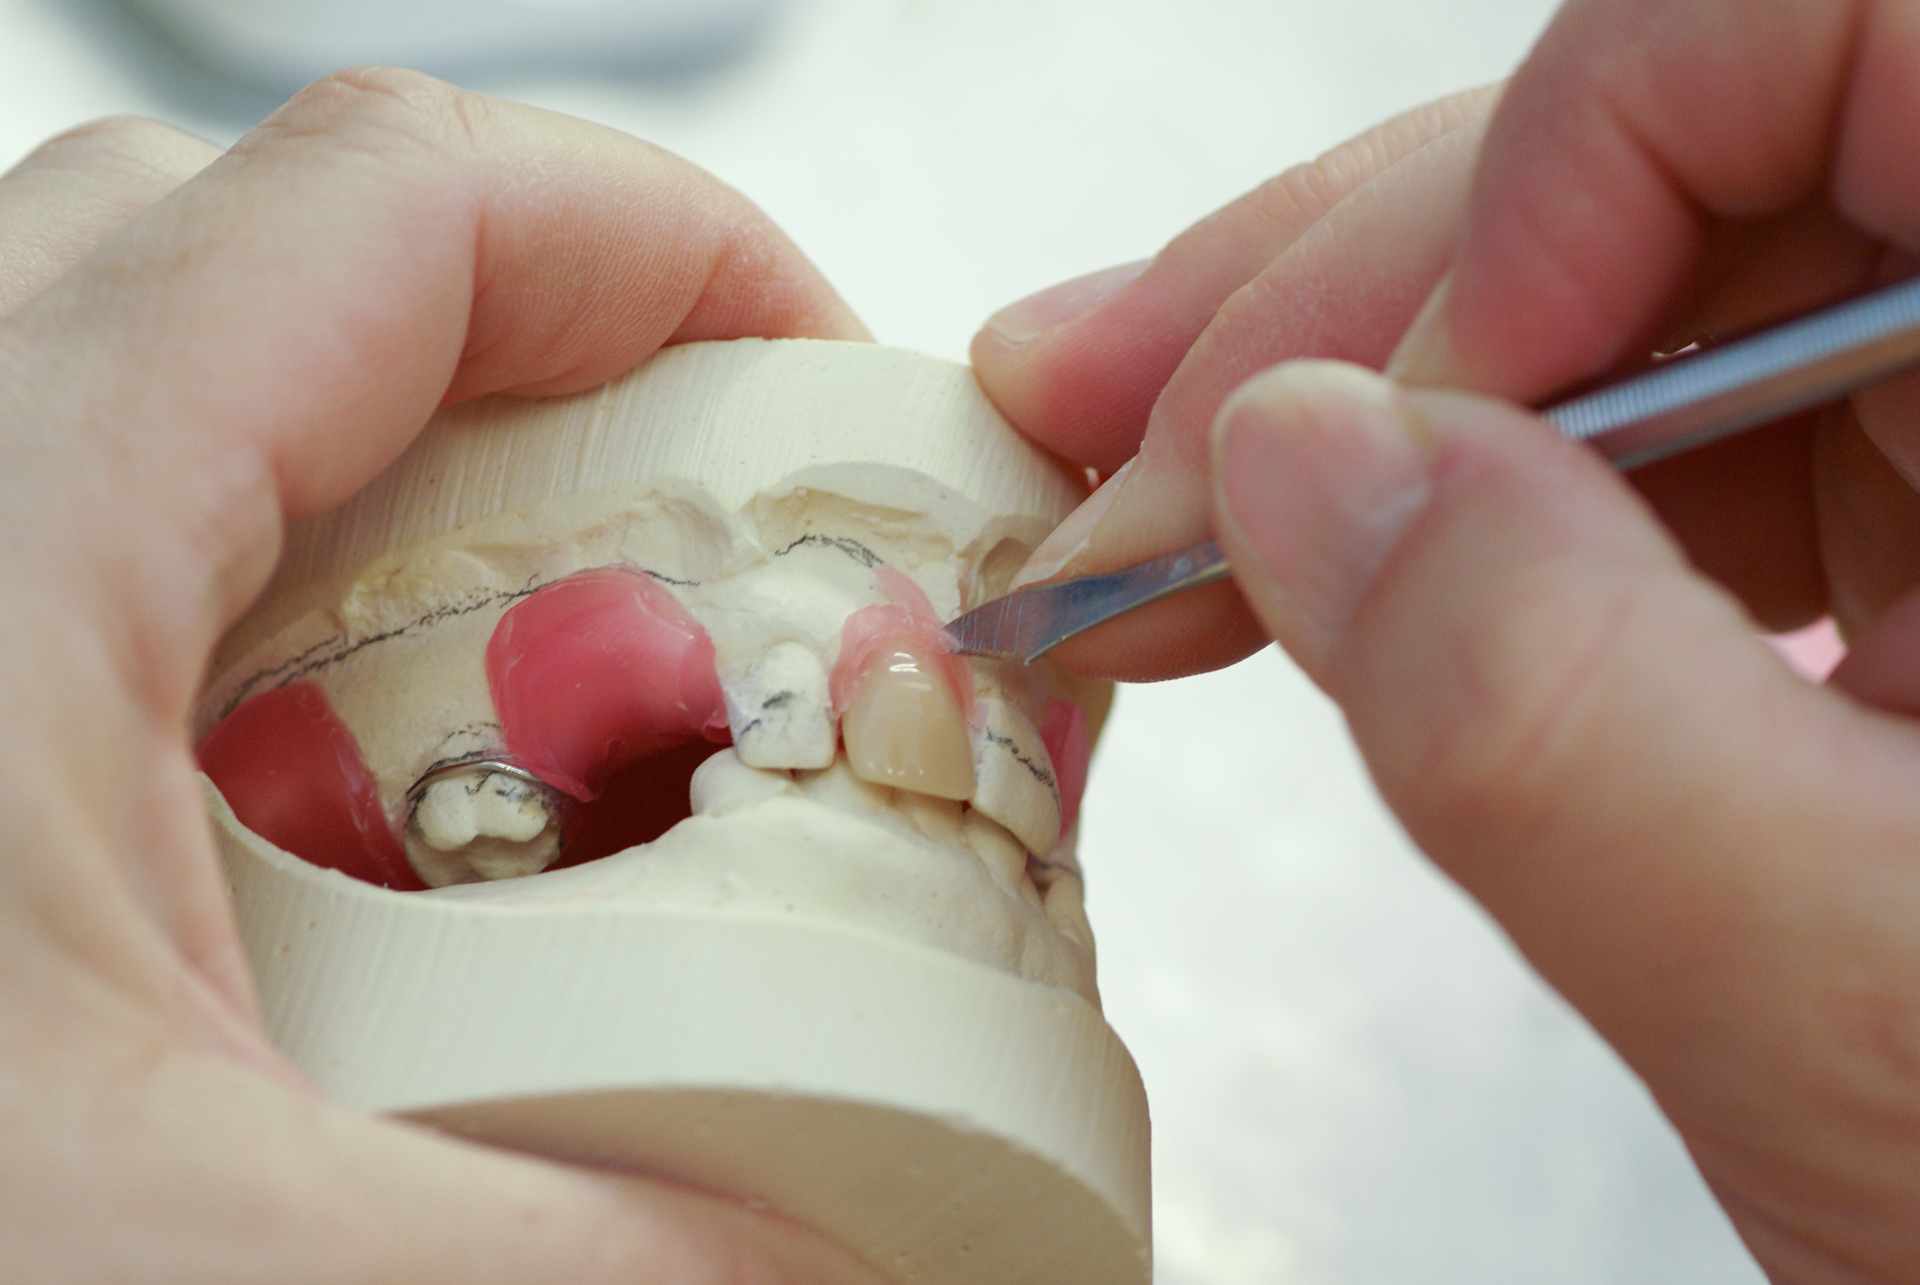 Making dentures, false teeth